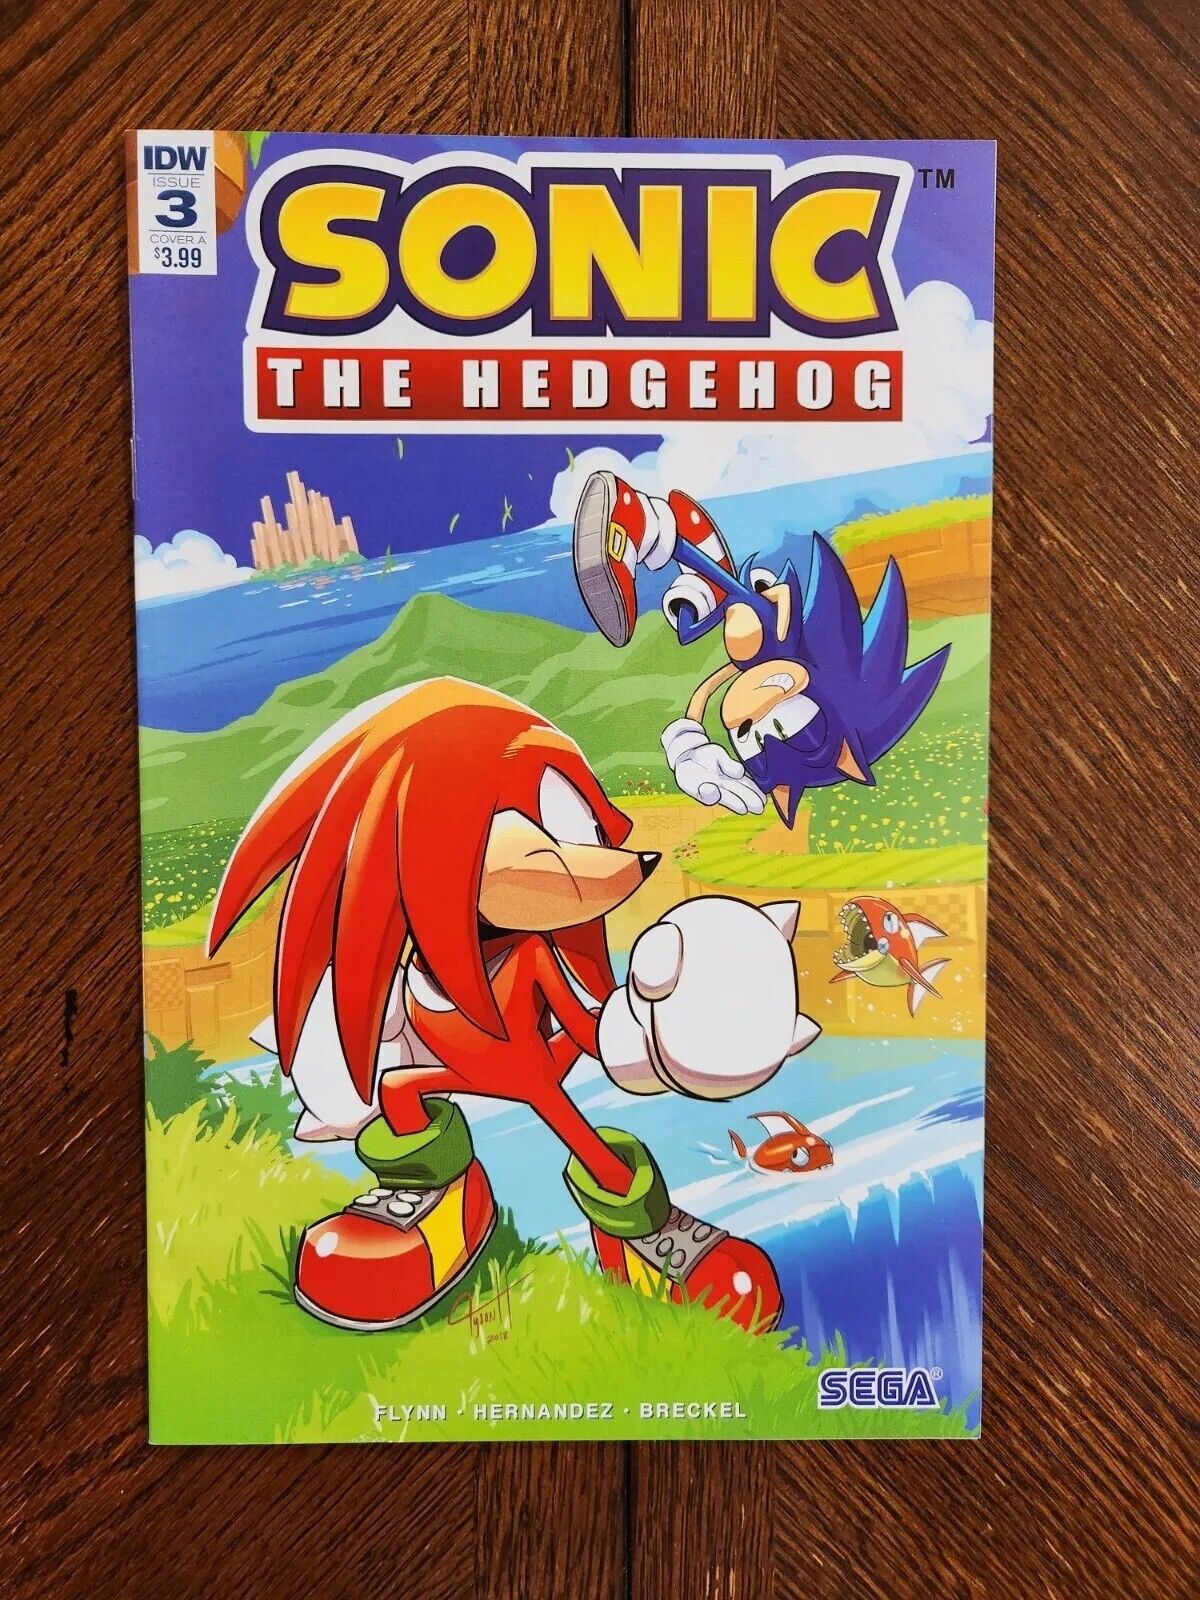 IDW Sonic the Hedgehog #3